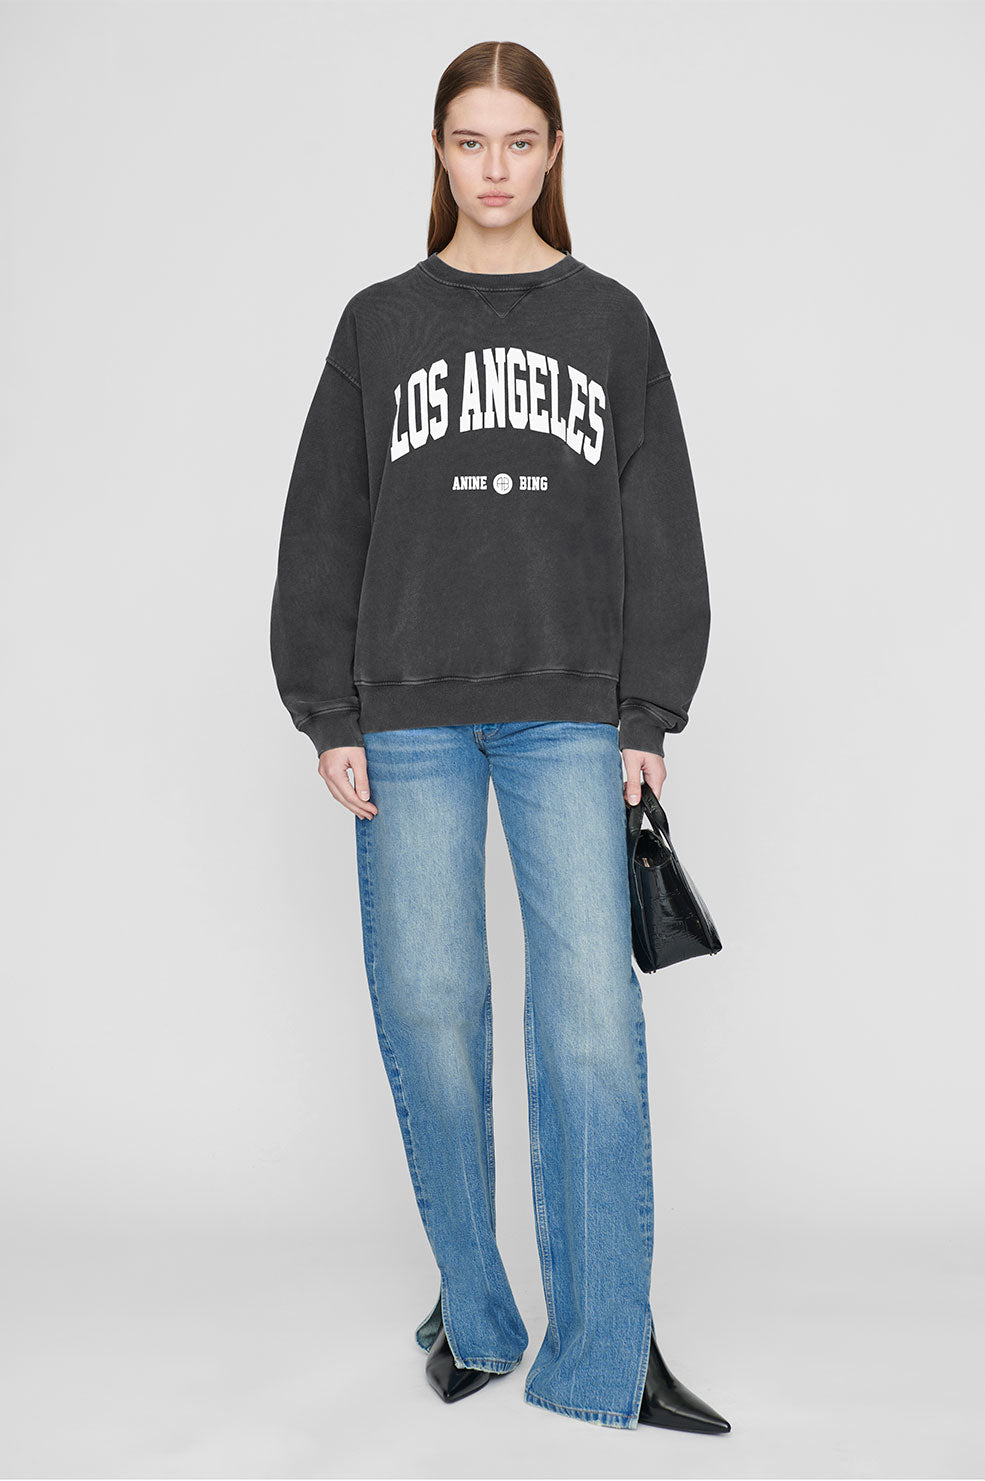 Ramona Sweatshirt University Los Angeles - Washed Black